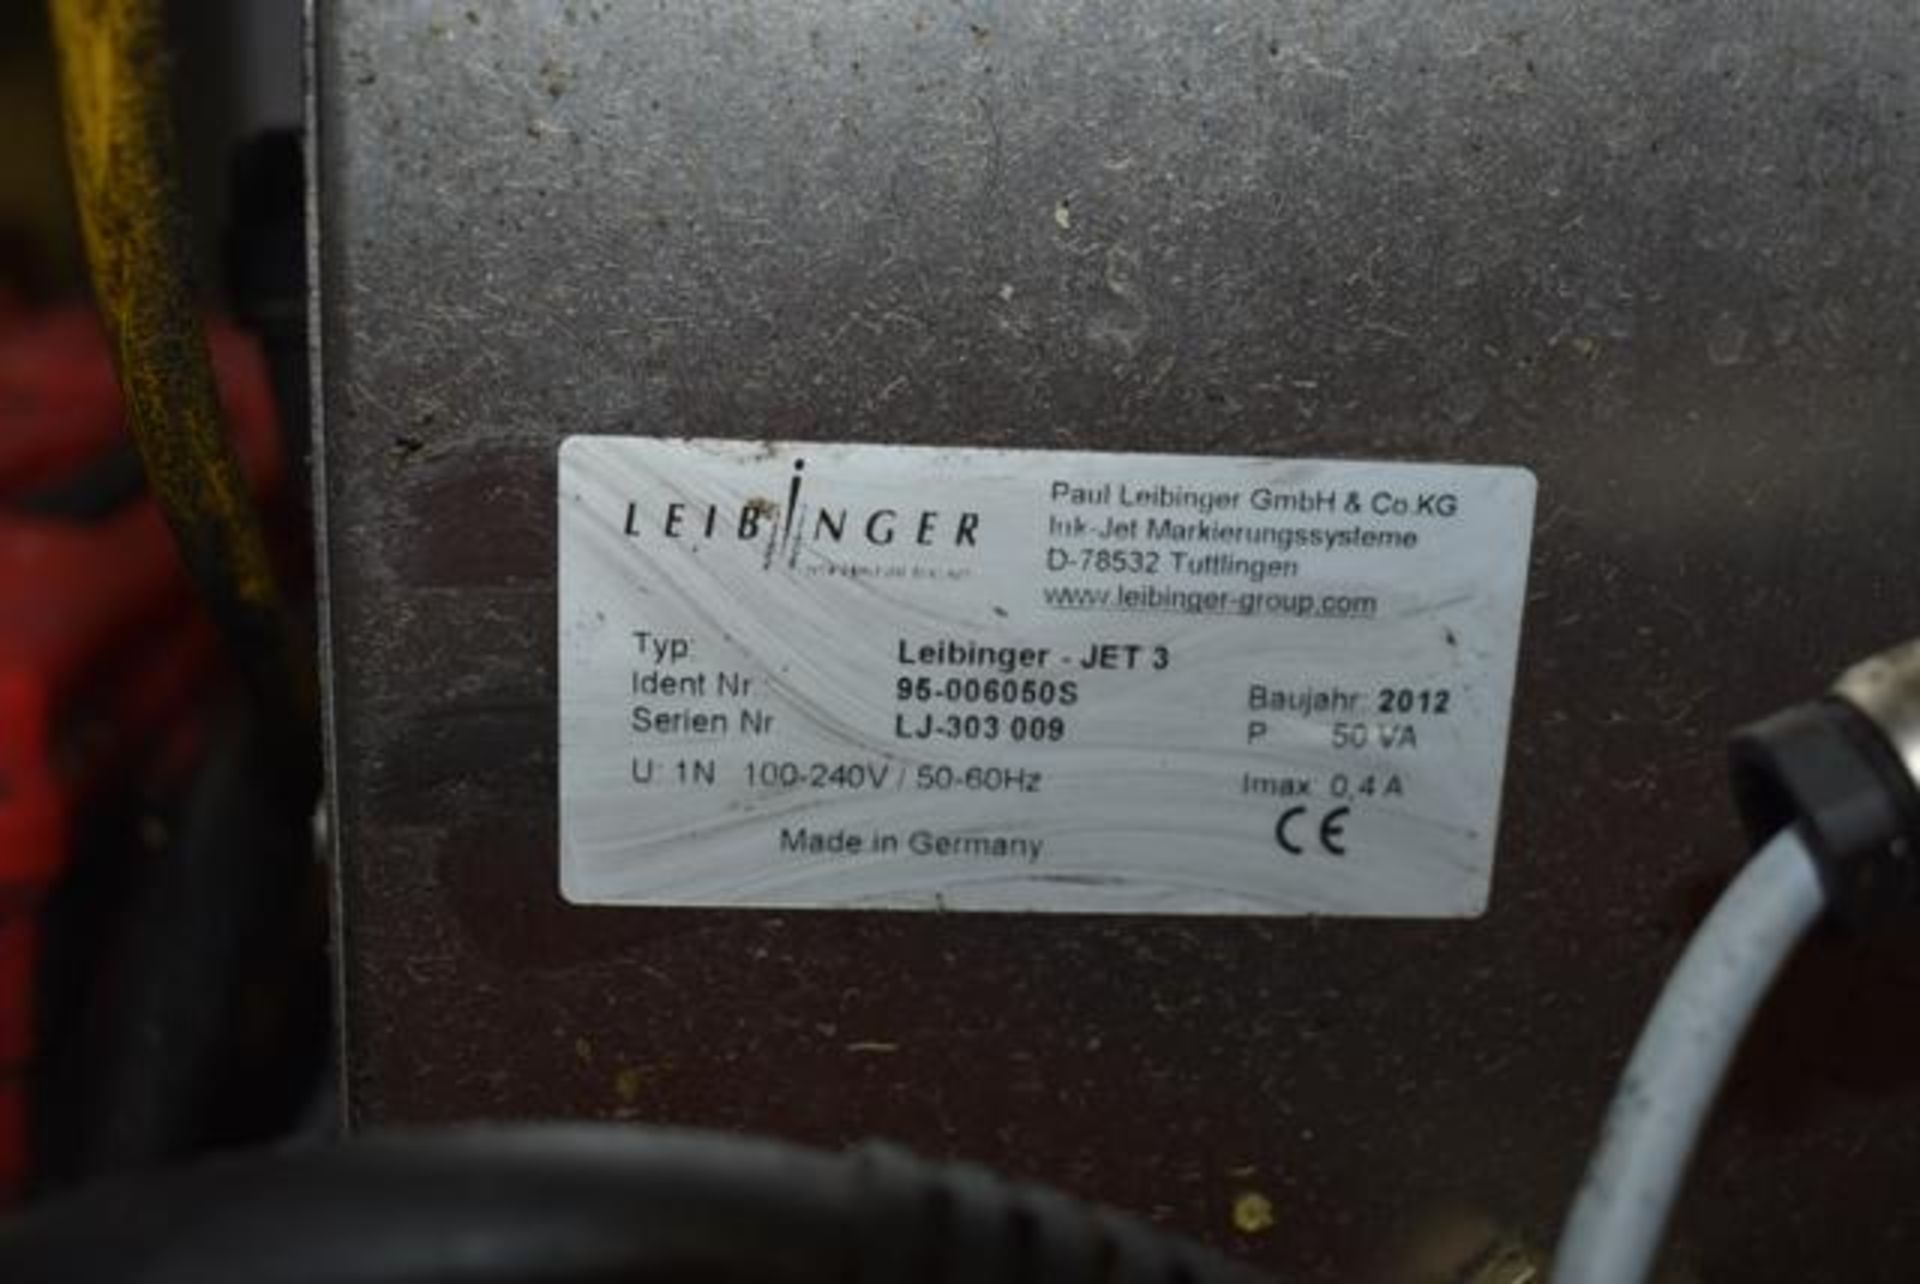 (Located in Sleepy Eye, MN) Leibinger Type Jet3 Printer, Catalog ID #95-006050S - Image 2 of 2